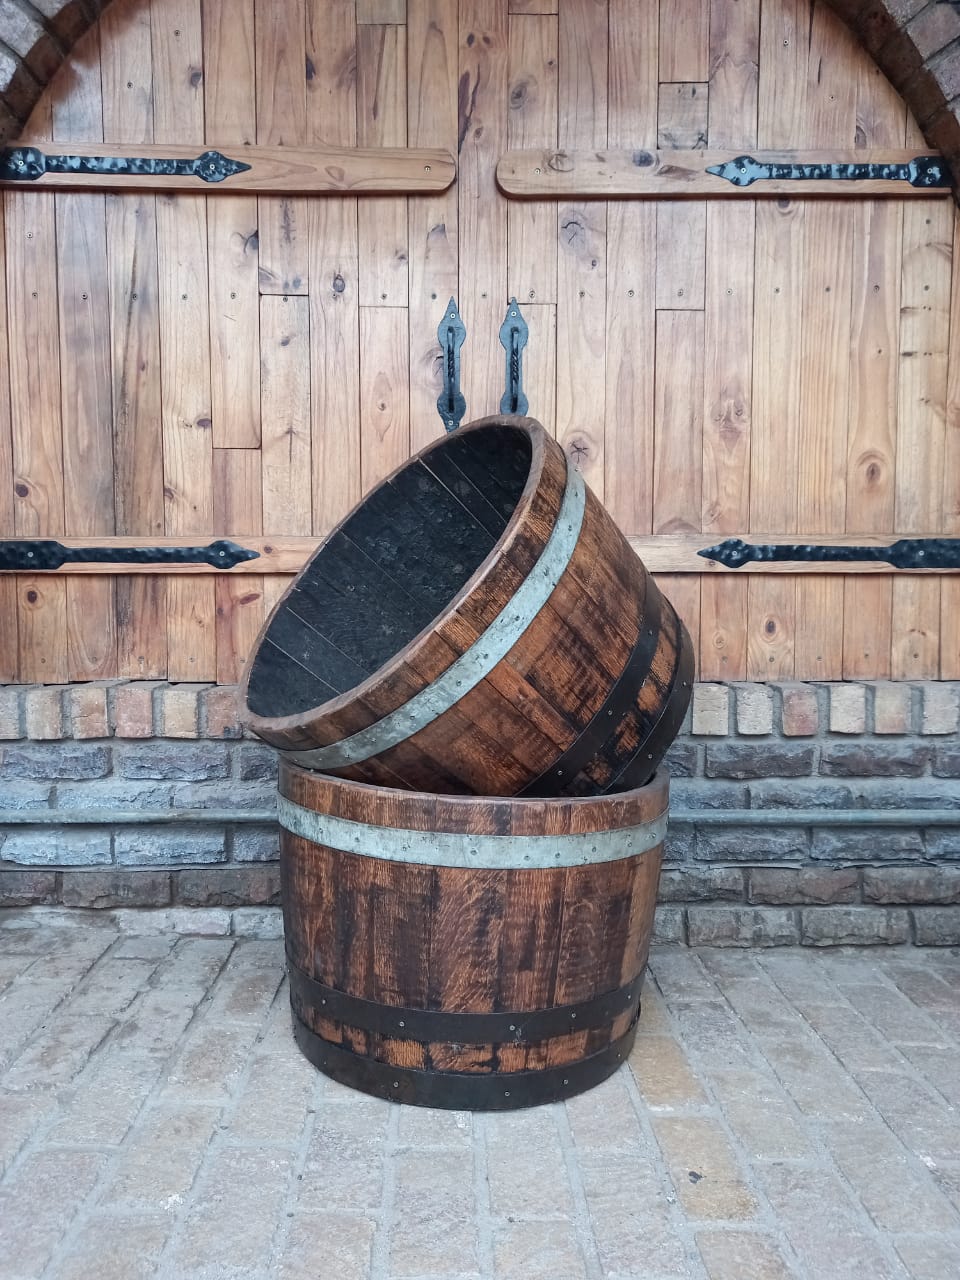 Whiskey barrels for sale